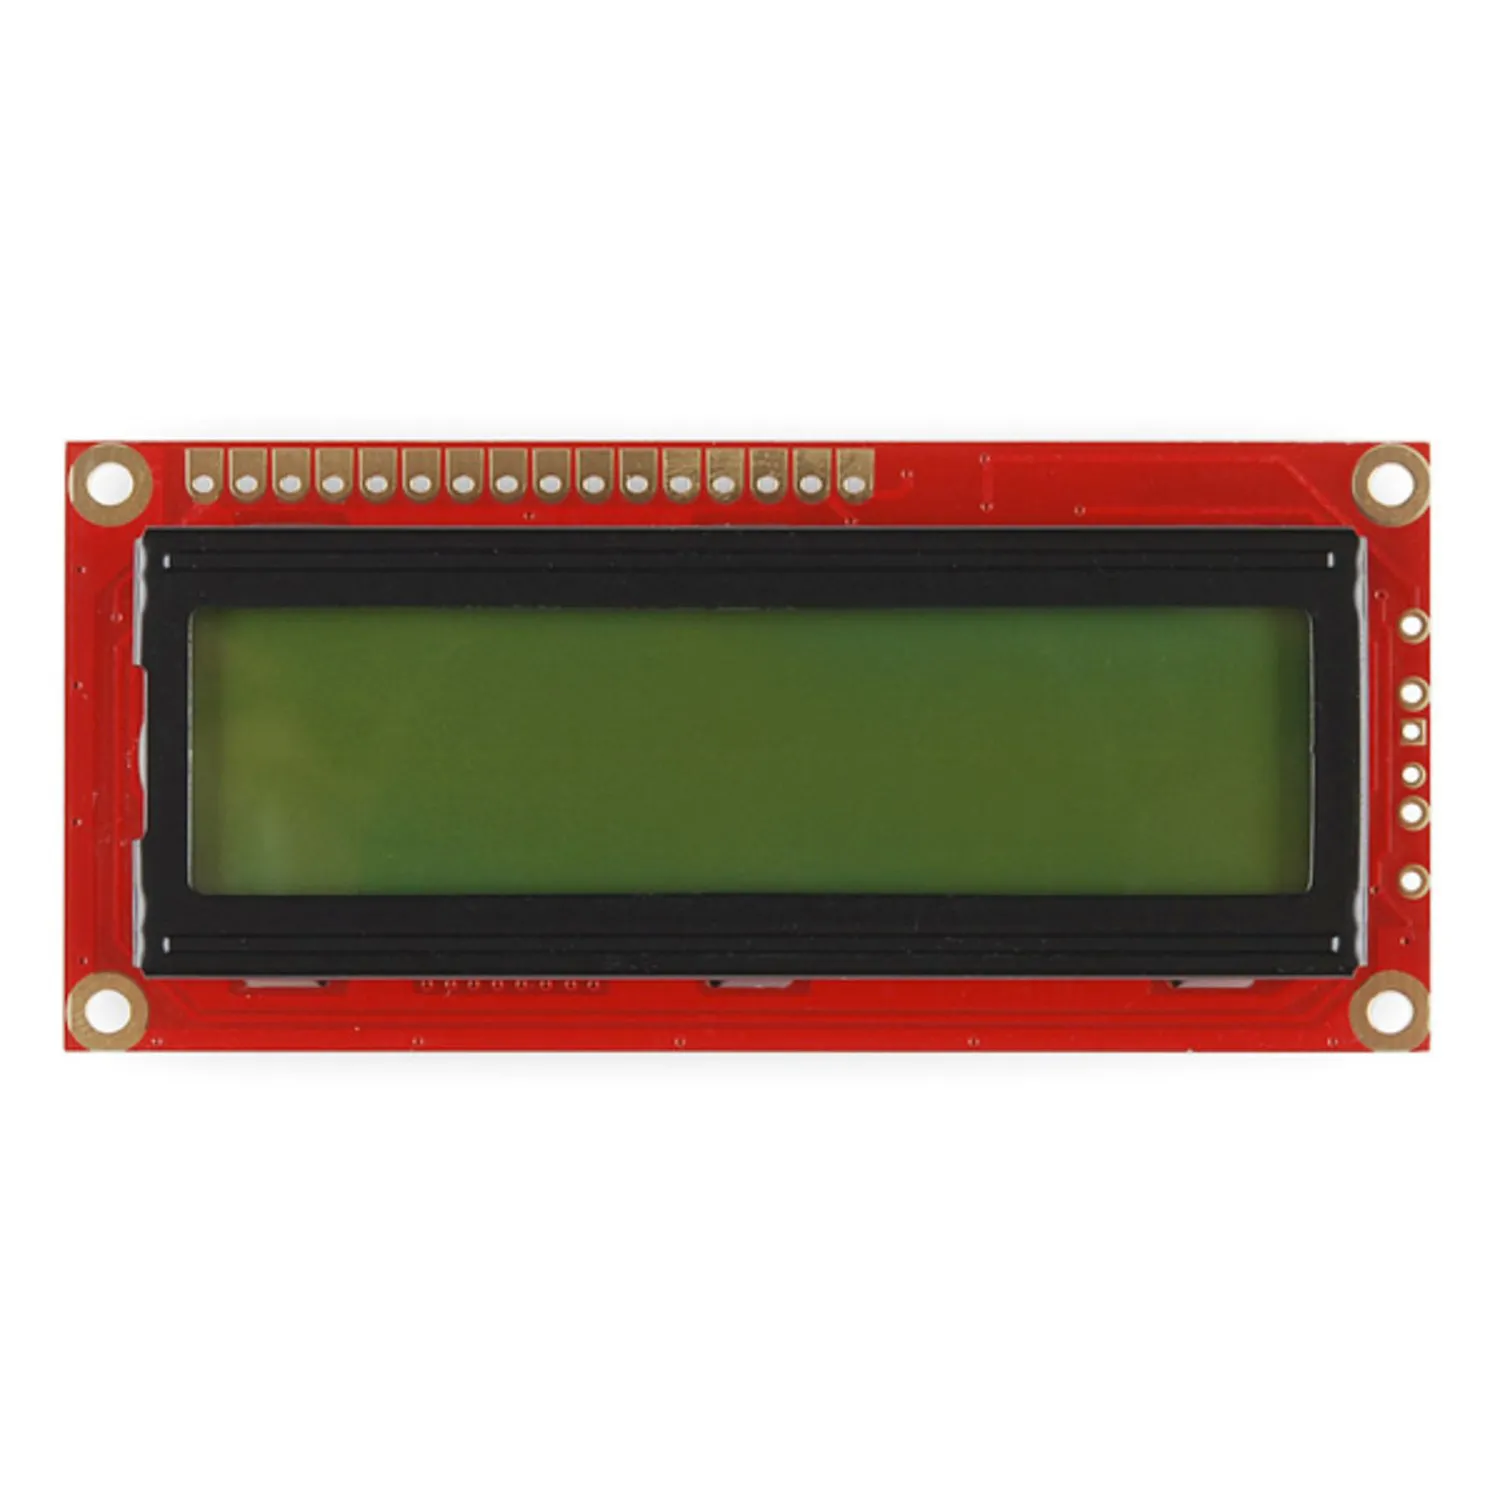 Photo of Basic 16x2 Character LCD - Black on Green 5V